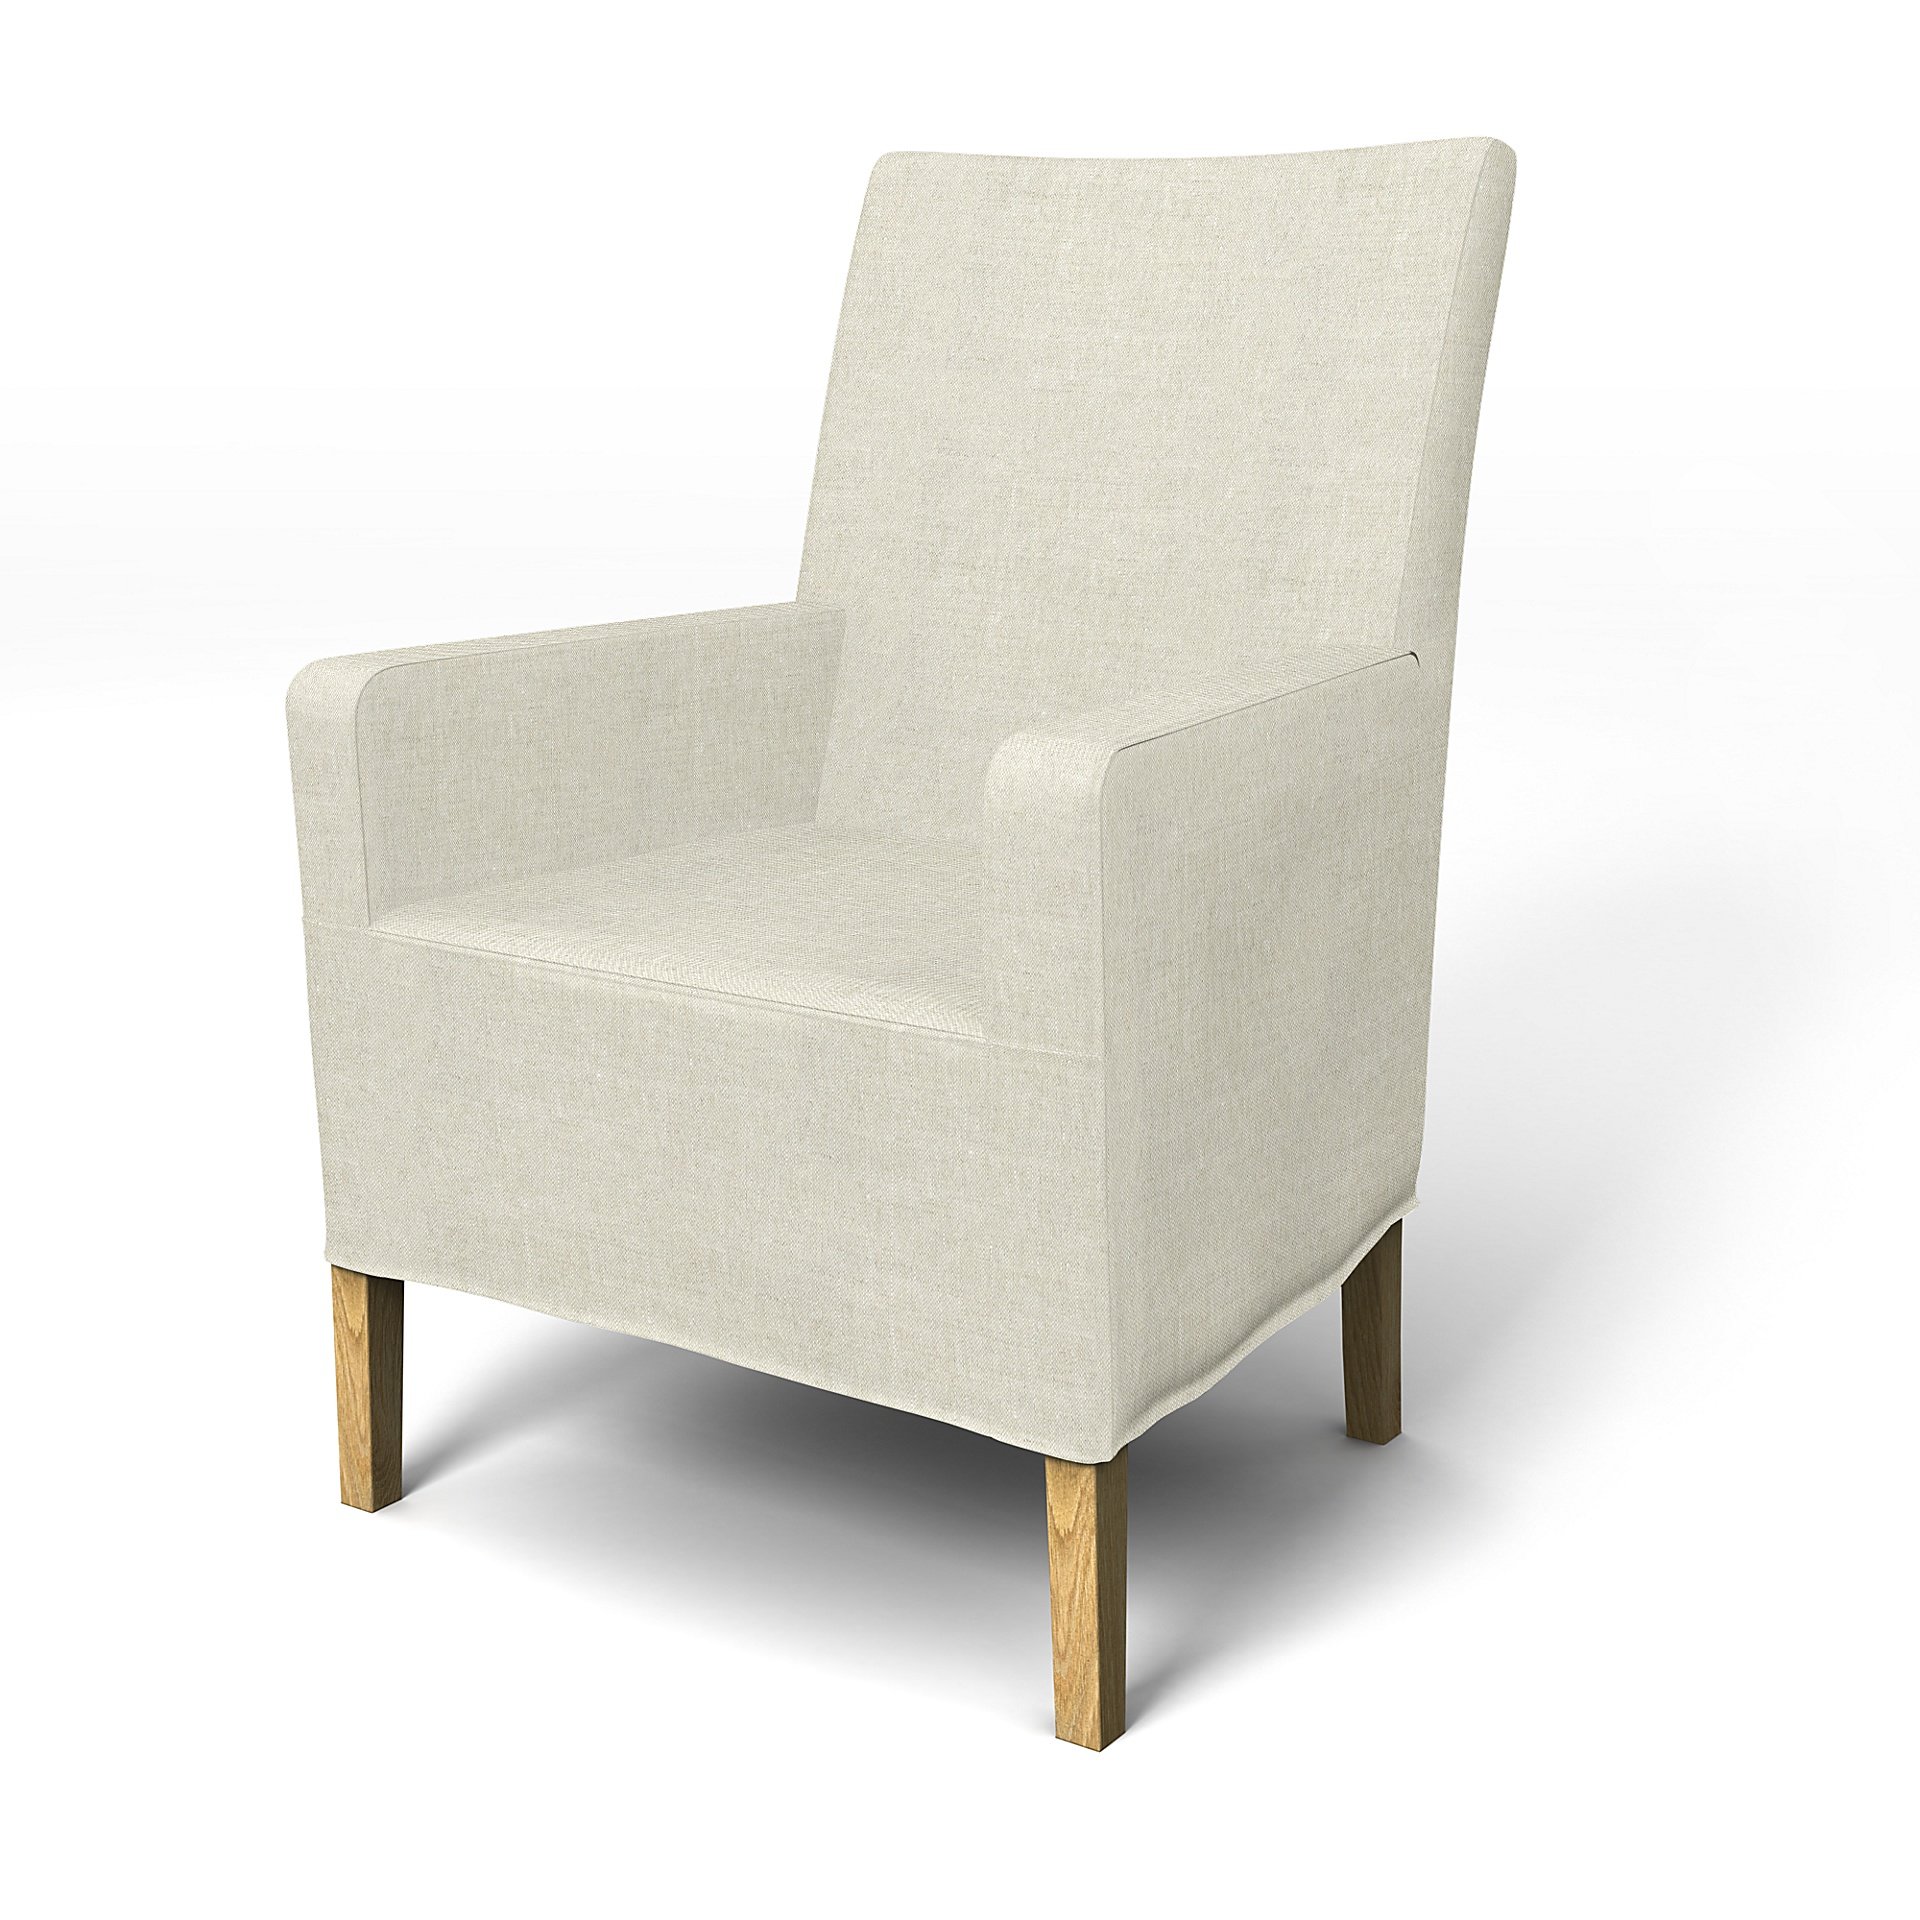 IKEA - Henriksdal, Chair cover w/ armrest, medium length skirt, Natural, Linen - Bemz